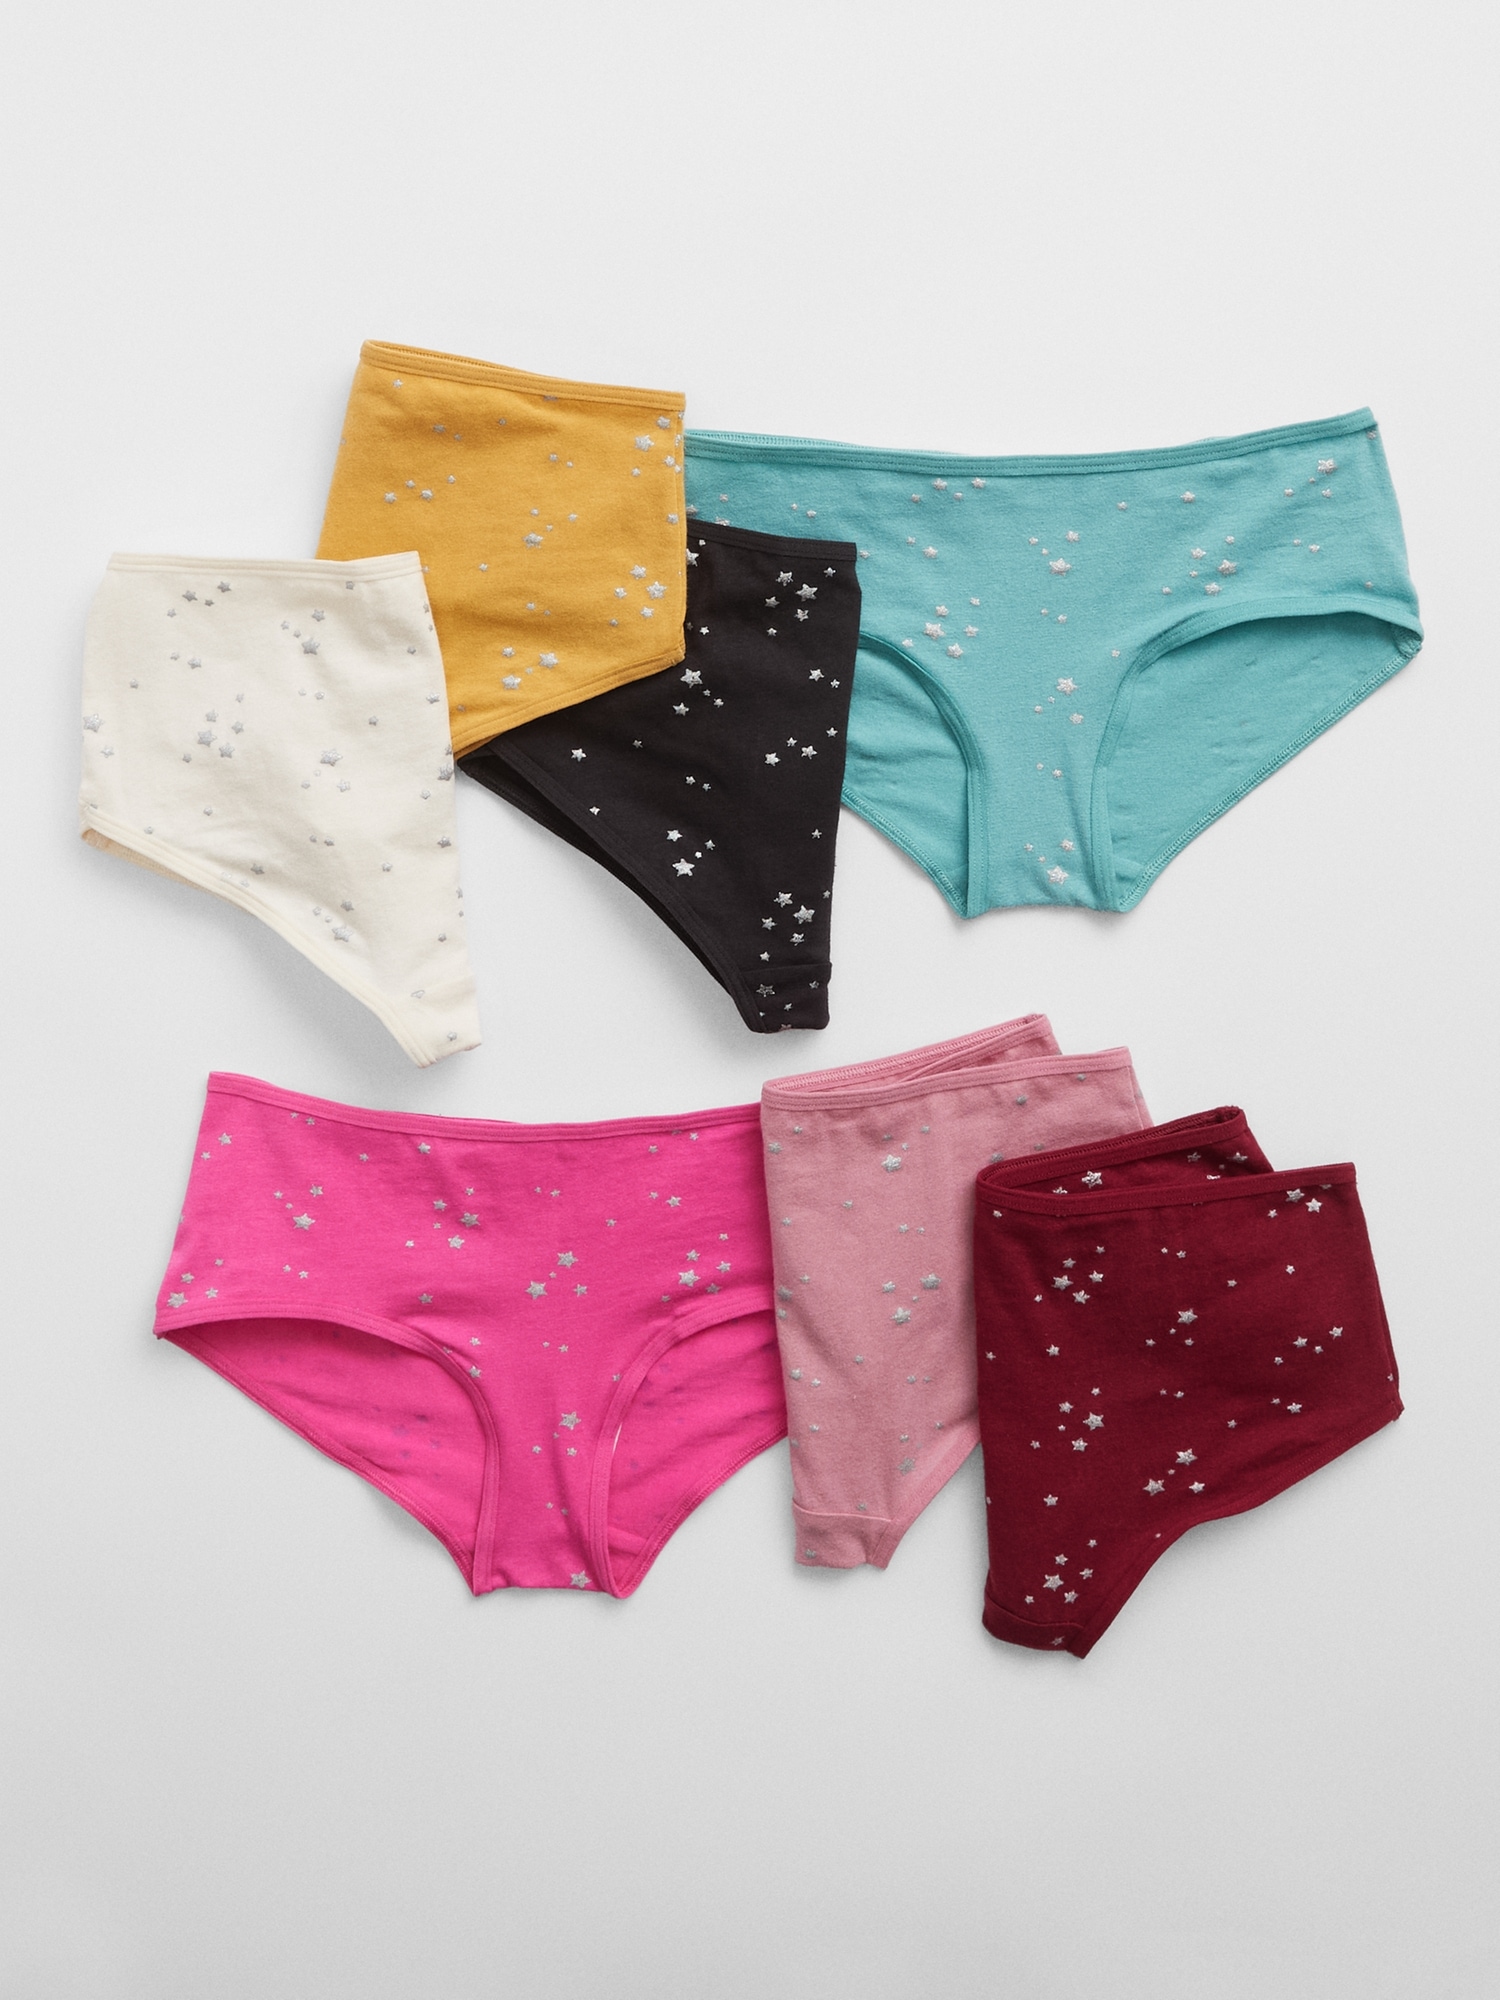 NEW GAP KIDS DISNEY Girls Small Underwear Small 6-7 NWOT 4 Pair